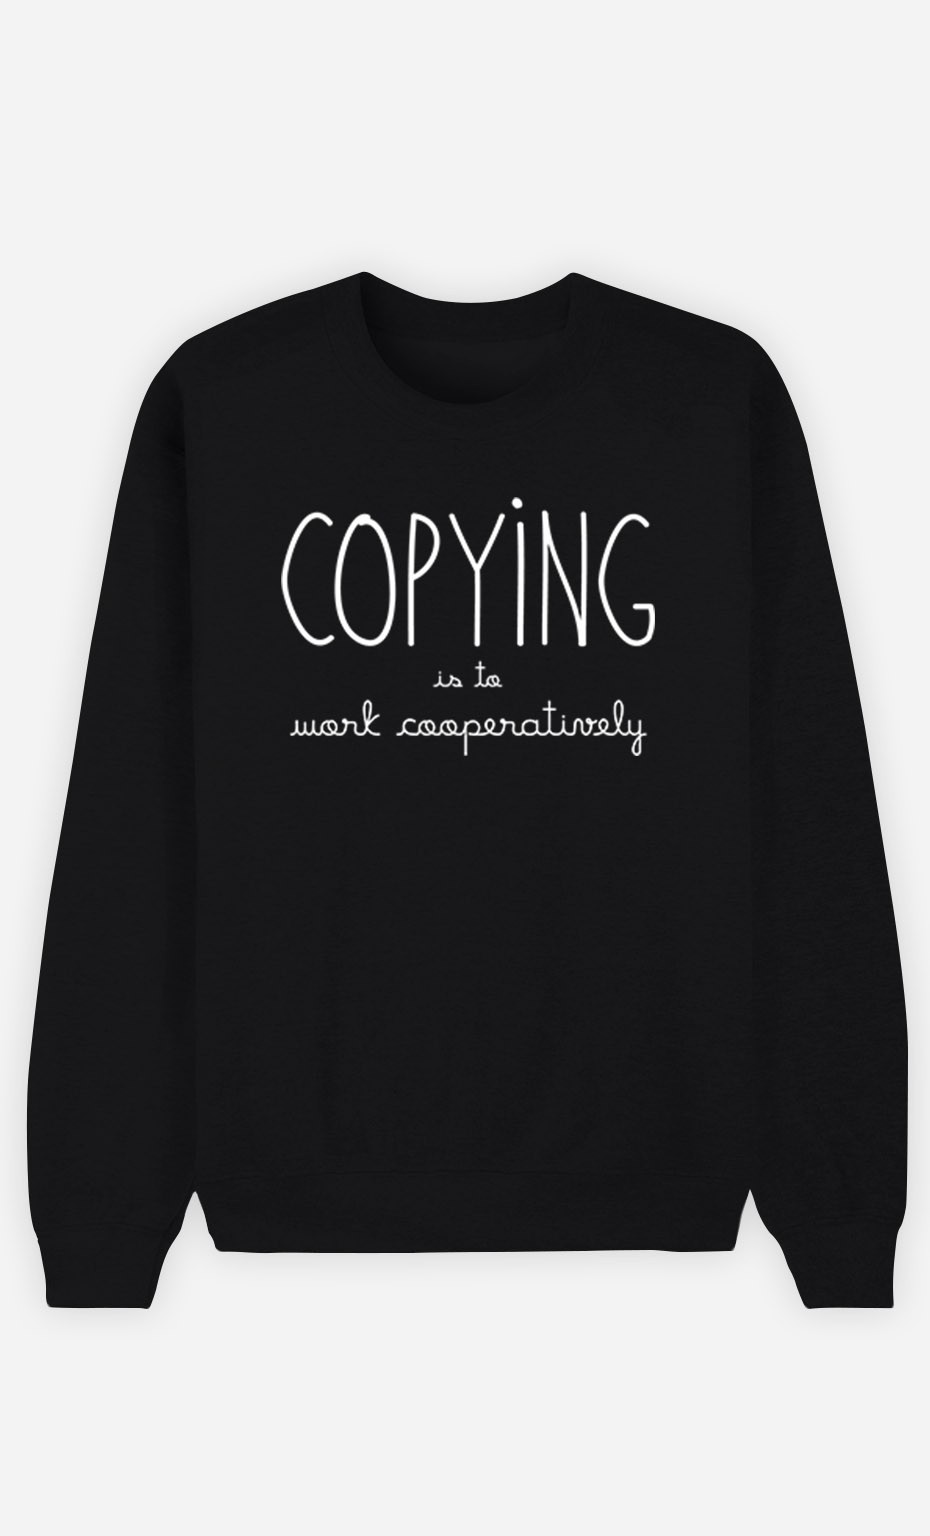 Black Sweatshirt Copying is to Work Cooperatively